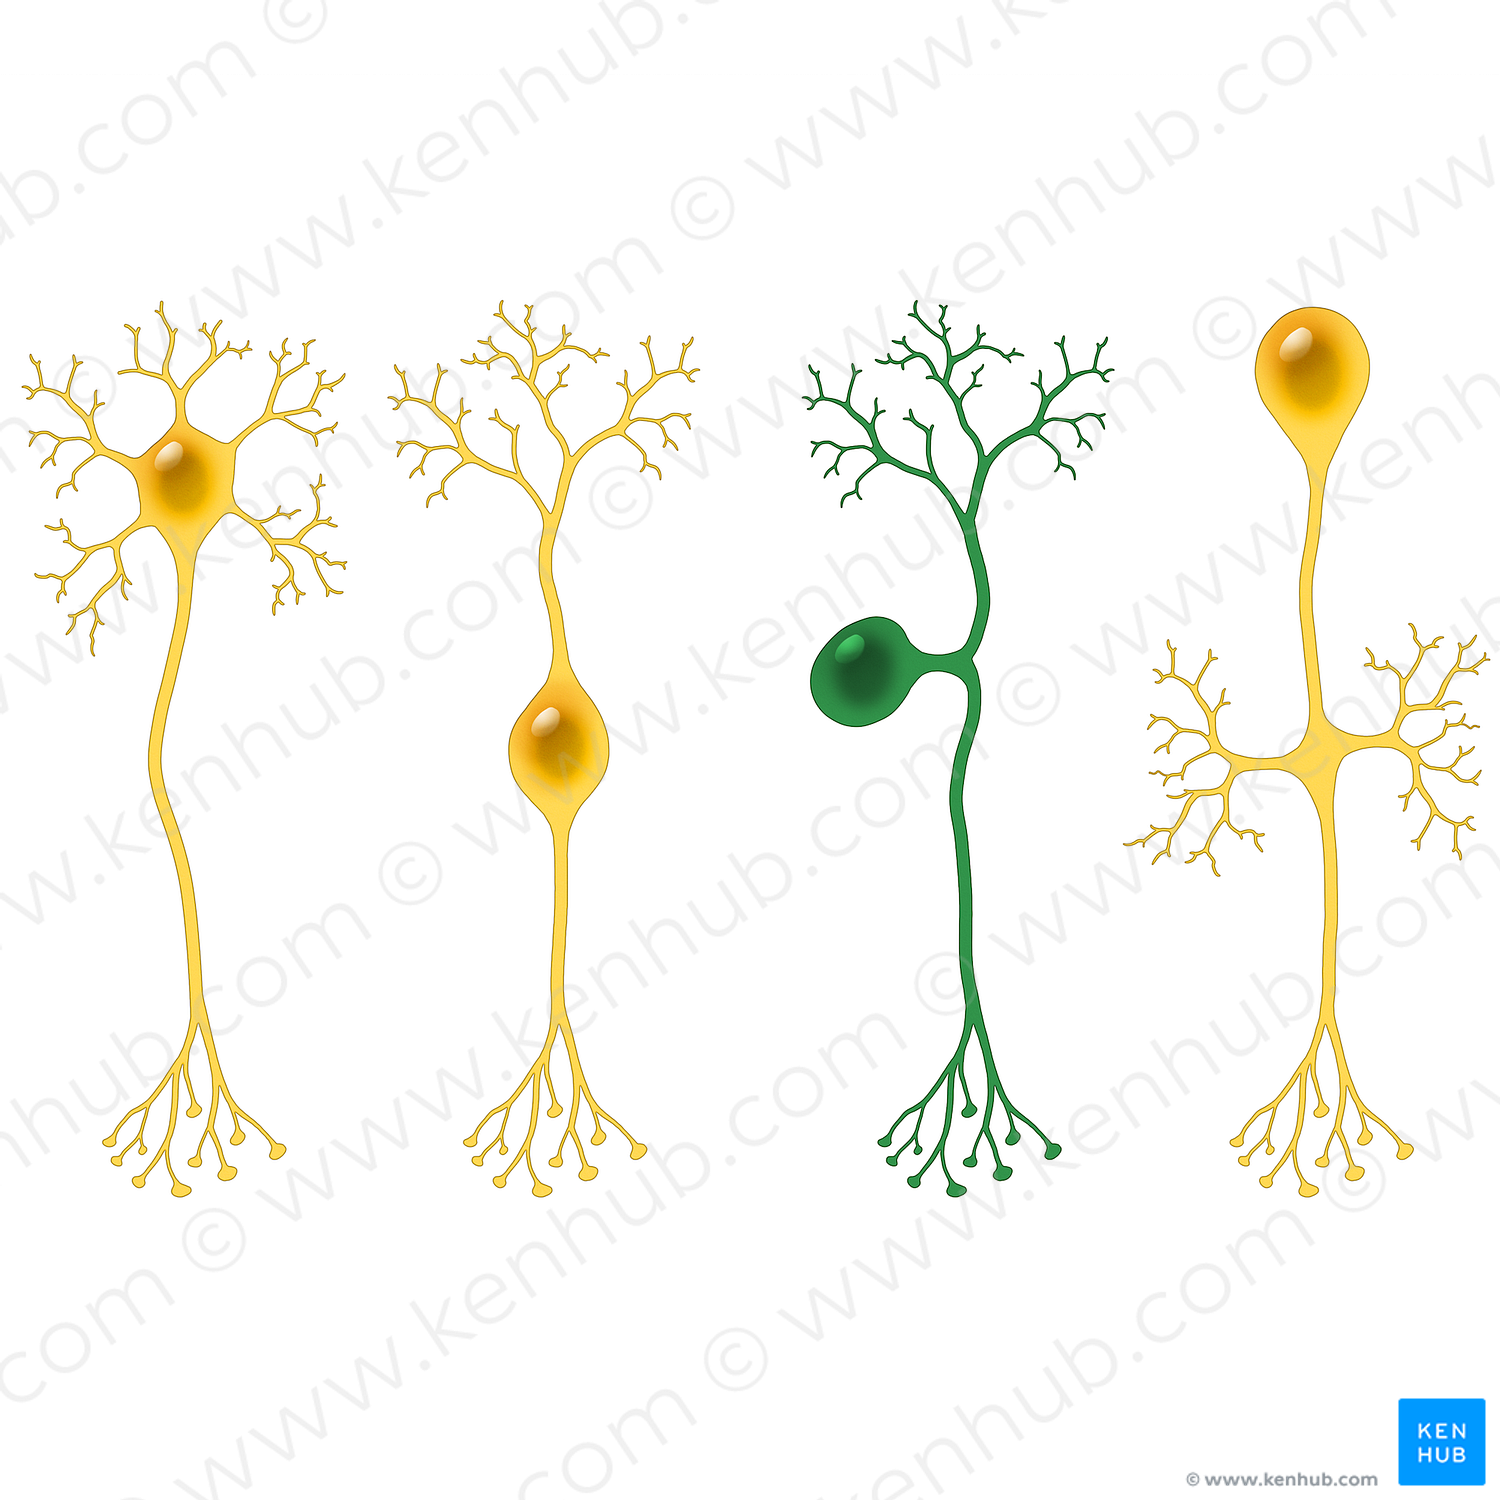 Pseudounipolar neuron (#13510)